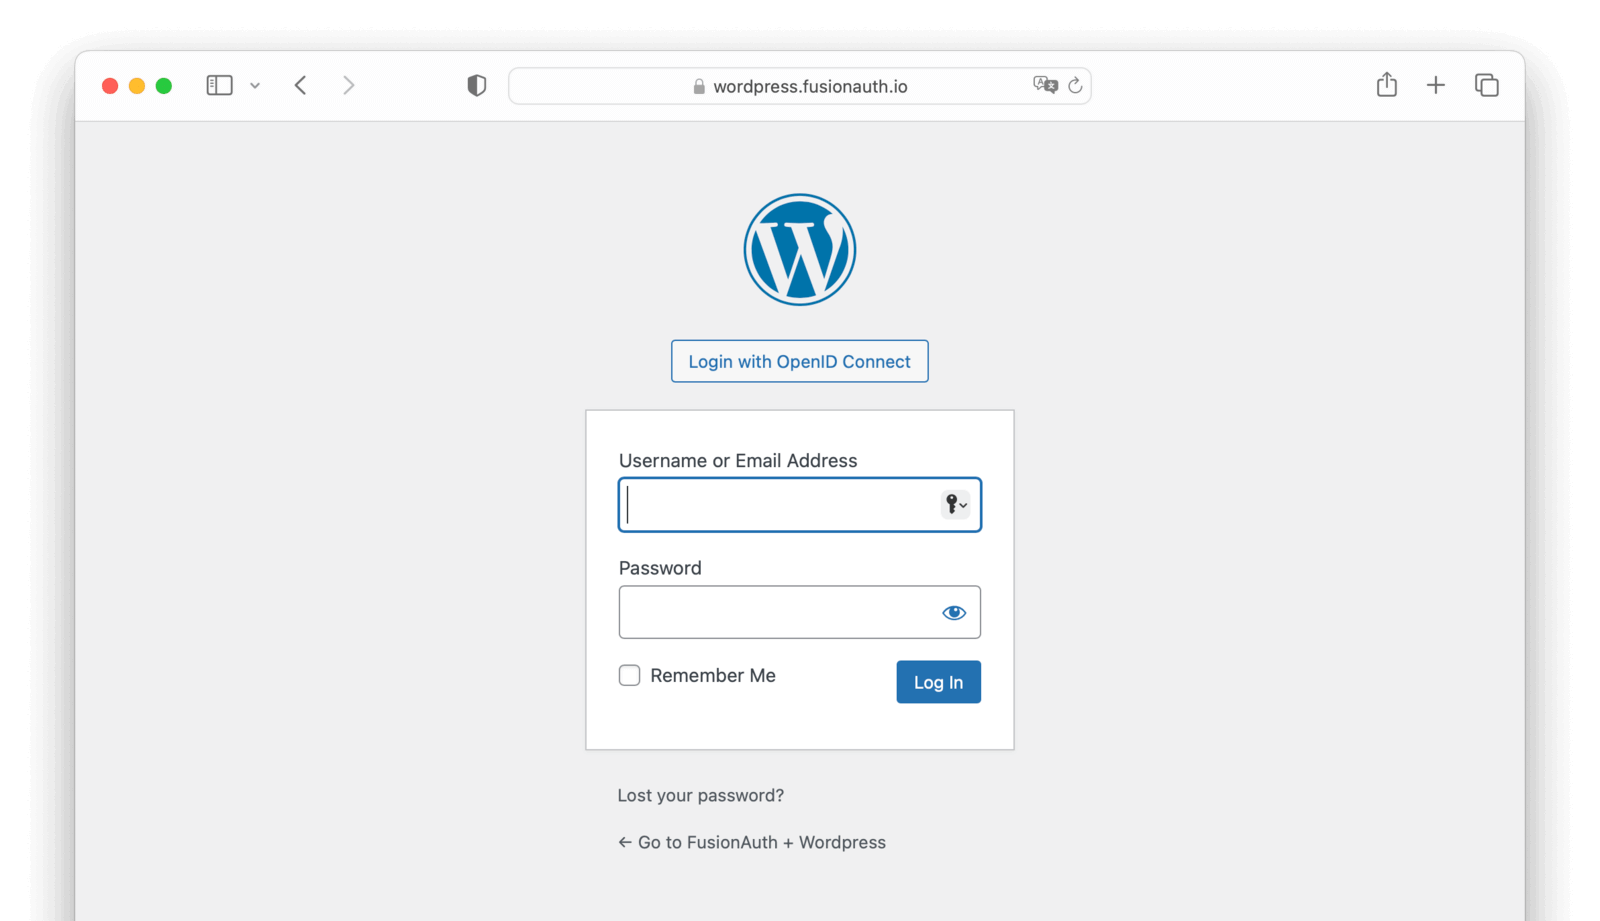 WordPress login screen with FusionAuth login enabled.